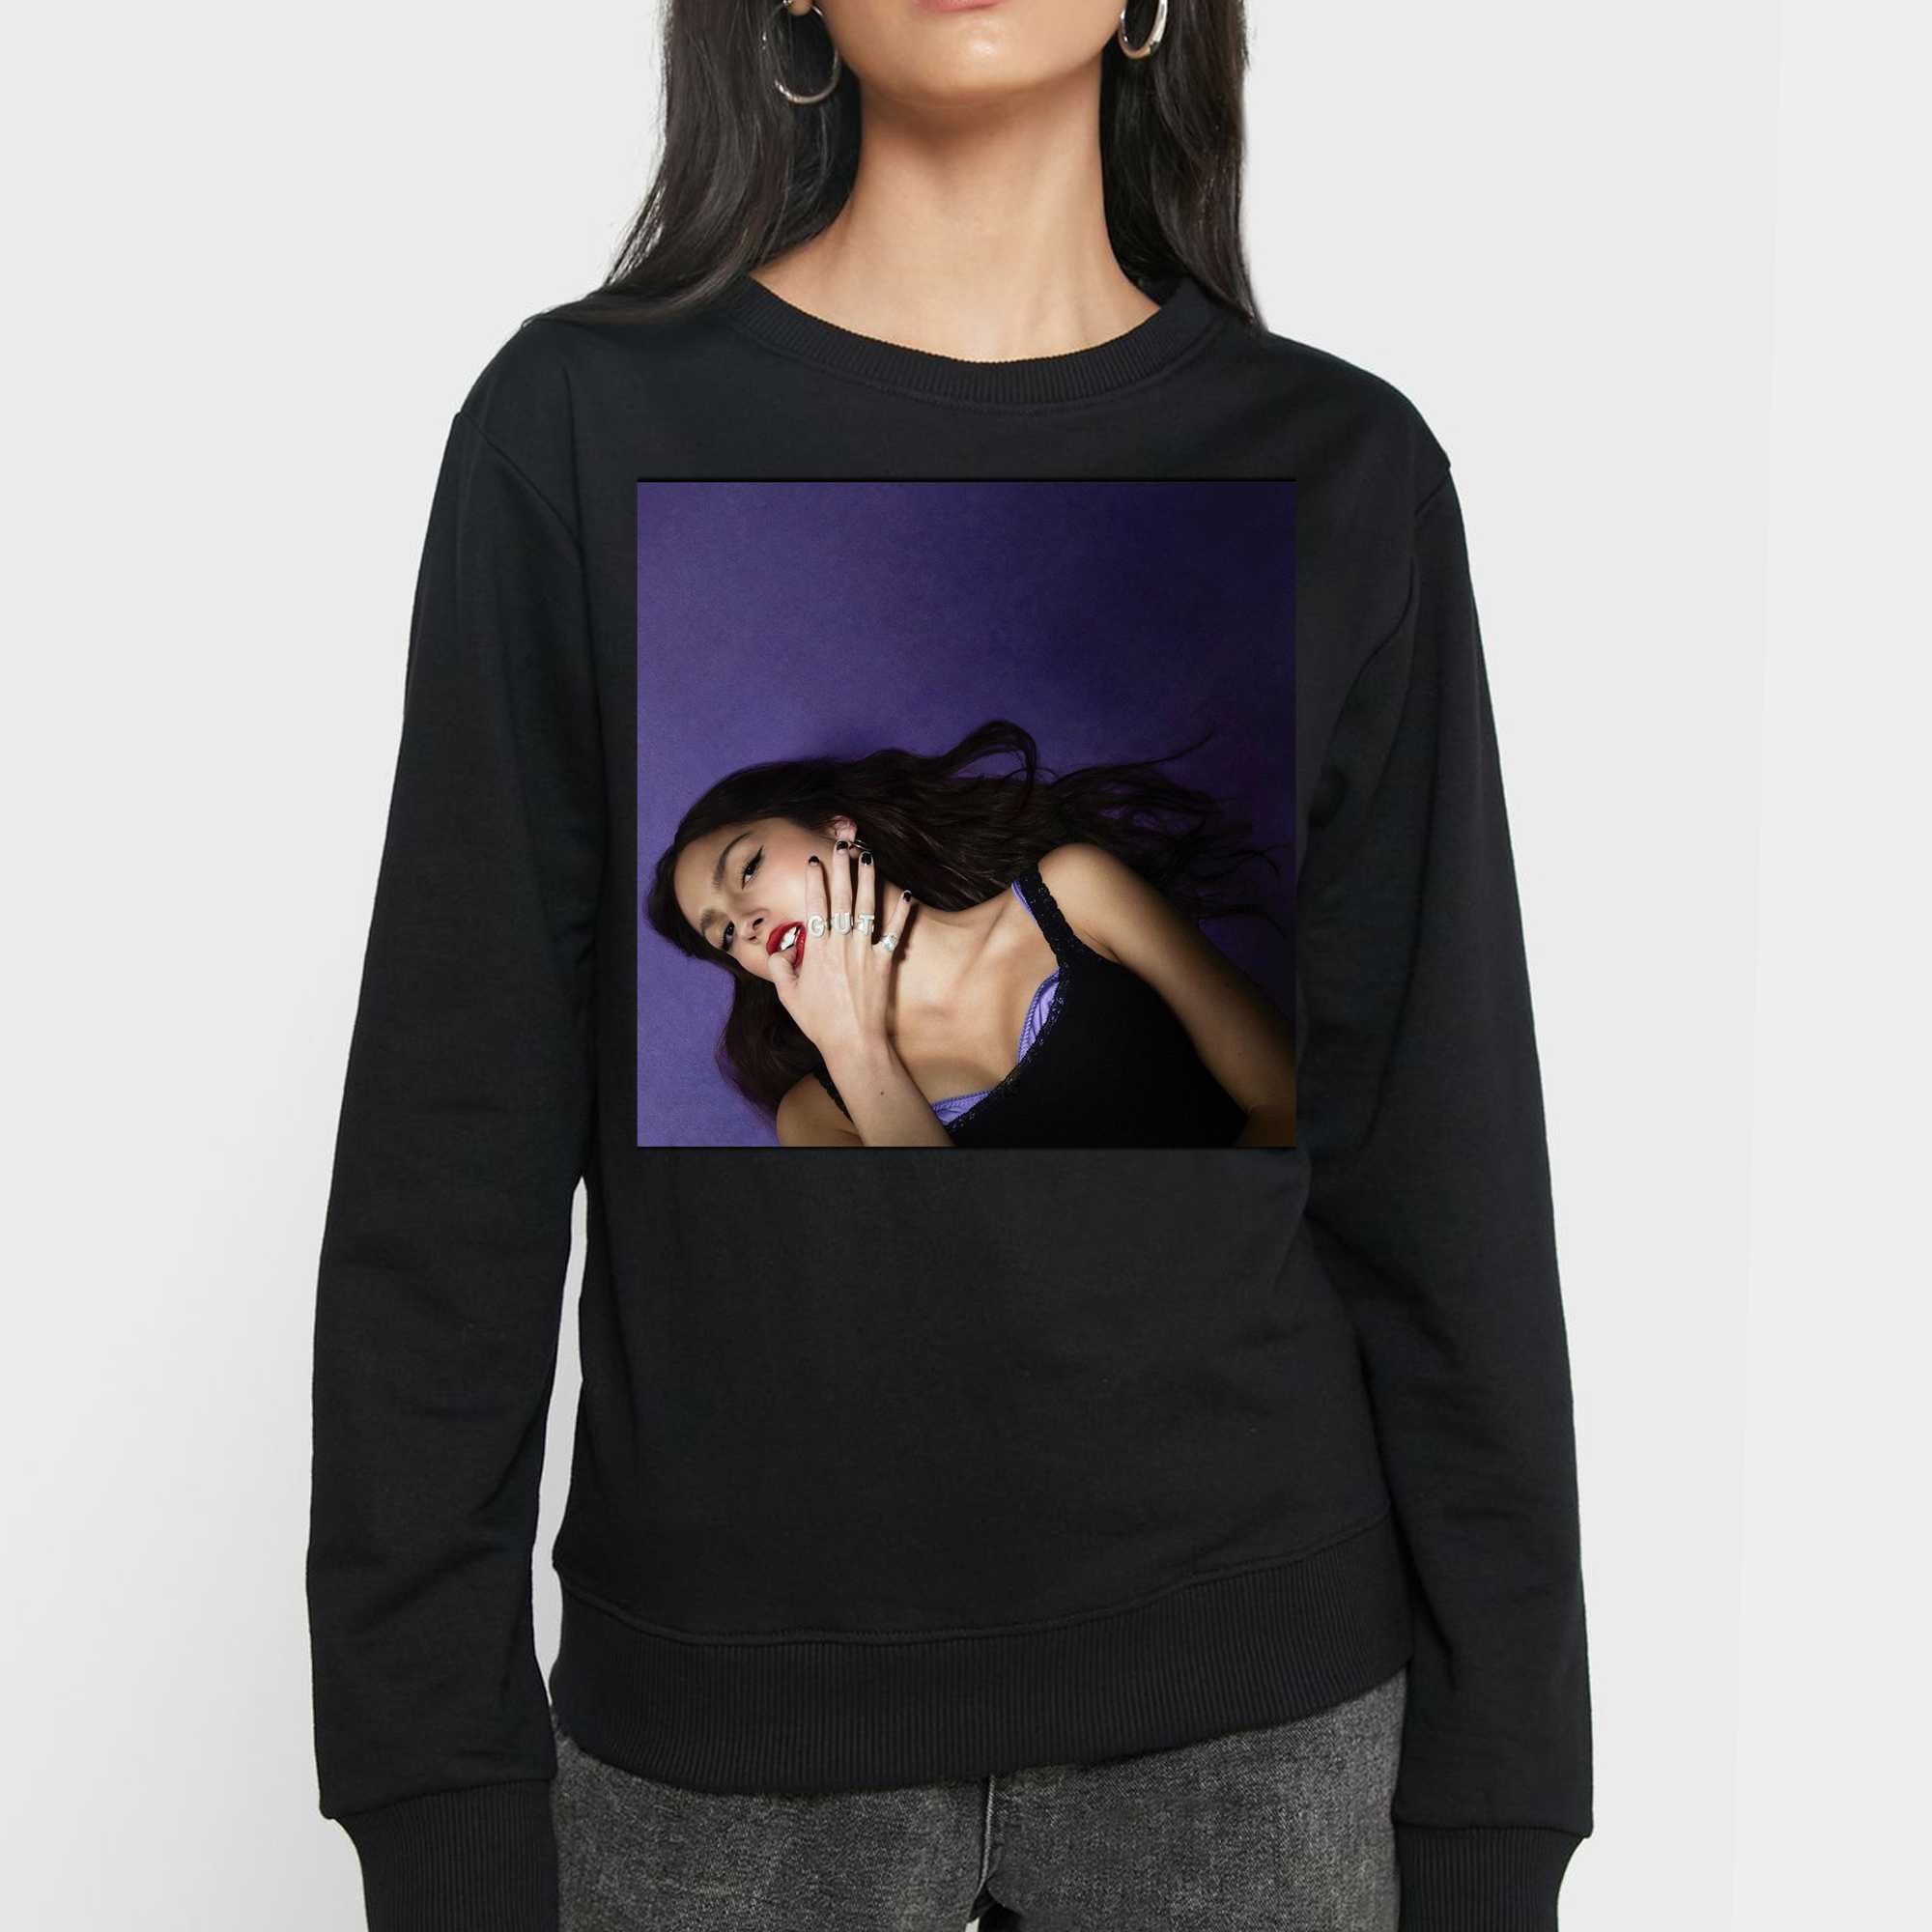 God Its Brutal Out Here Sweatshirt, Olivia Rodrigo Merch, Olivia Rodrigo Shirt, Olivia Rodrigo Guts, Olivia Rodrigo Sweatshirt, Guts Album